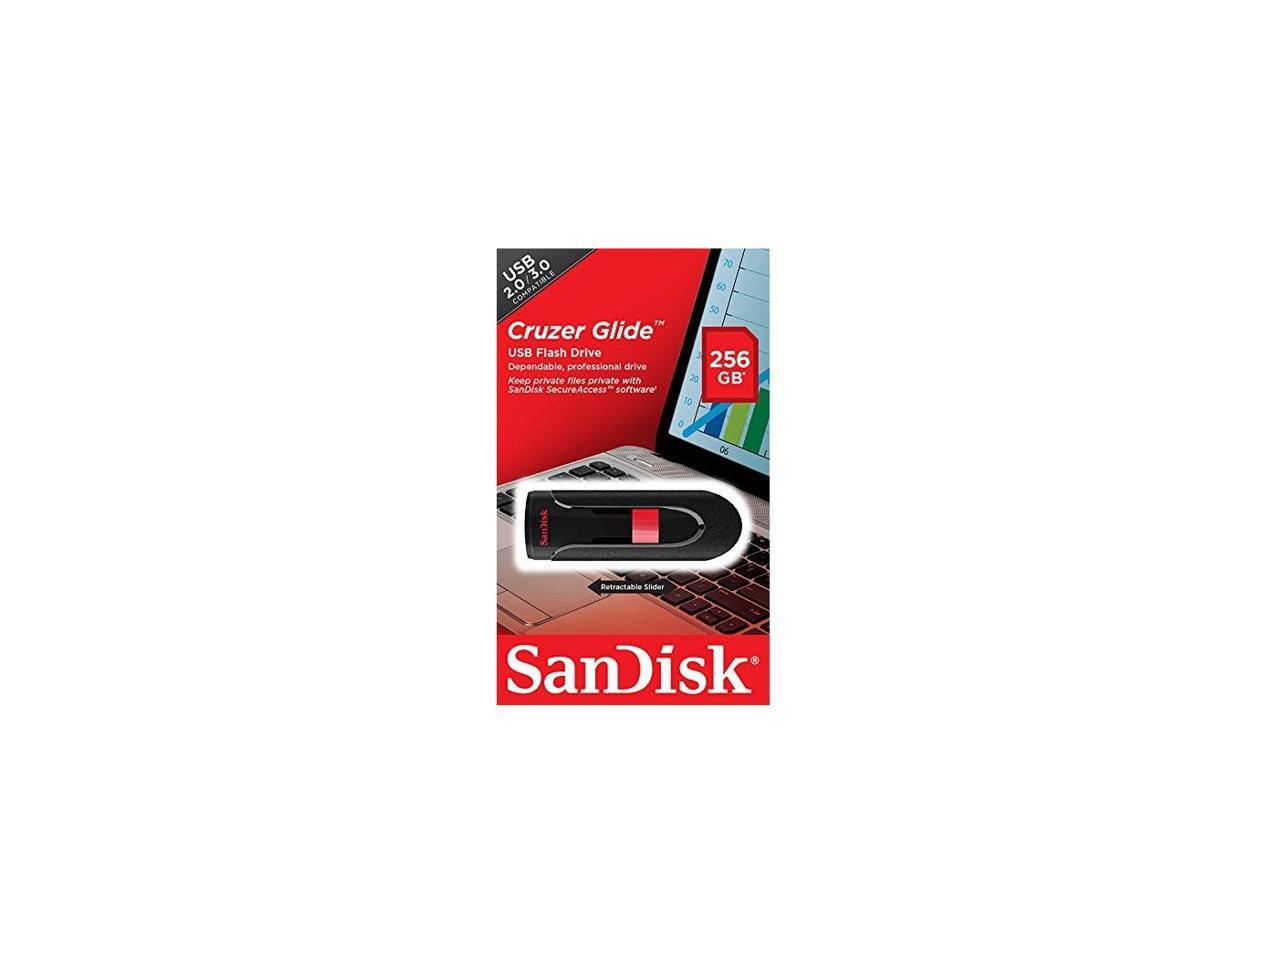 SanDisk 256GB CRUZER USB FLSHDRV- Part # SDCZ60-256G-A46